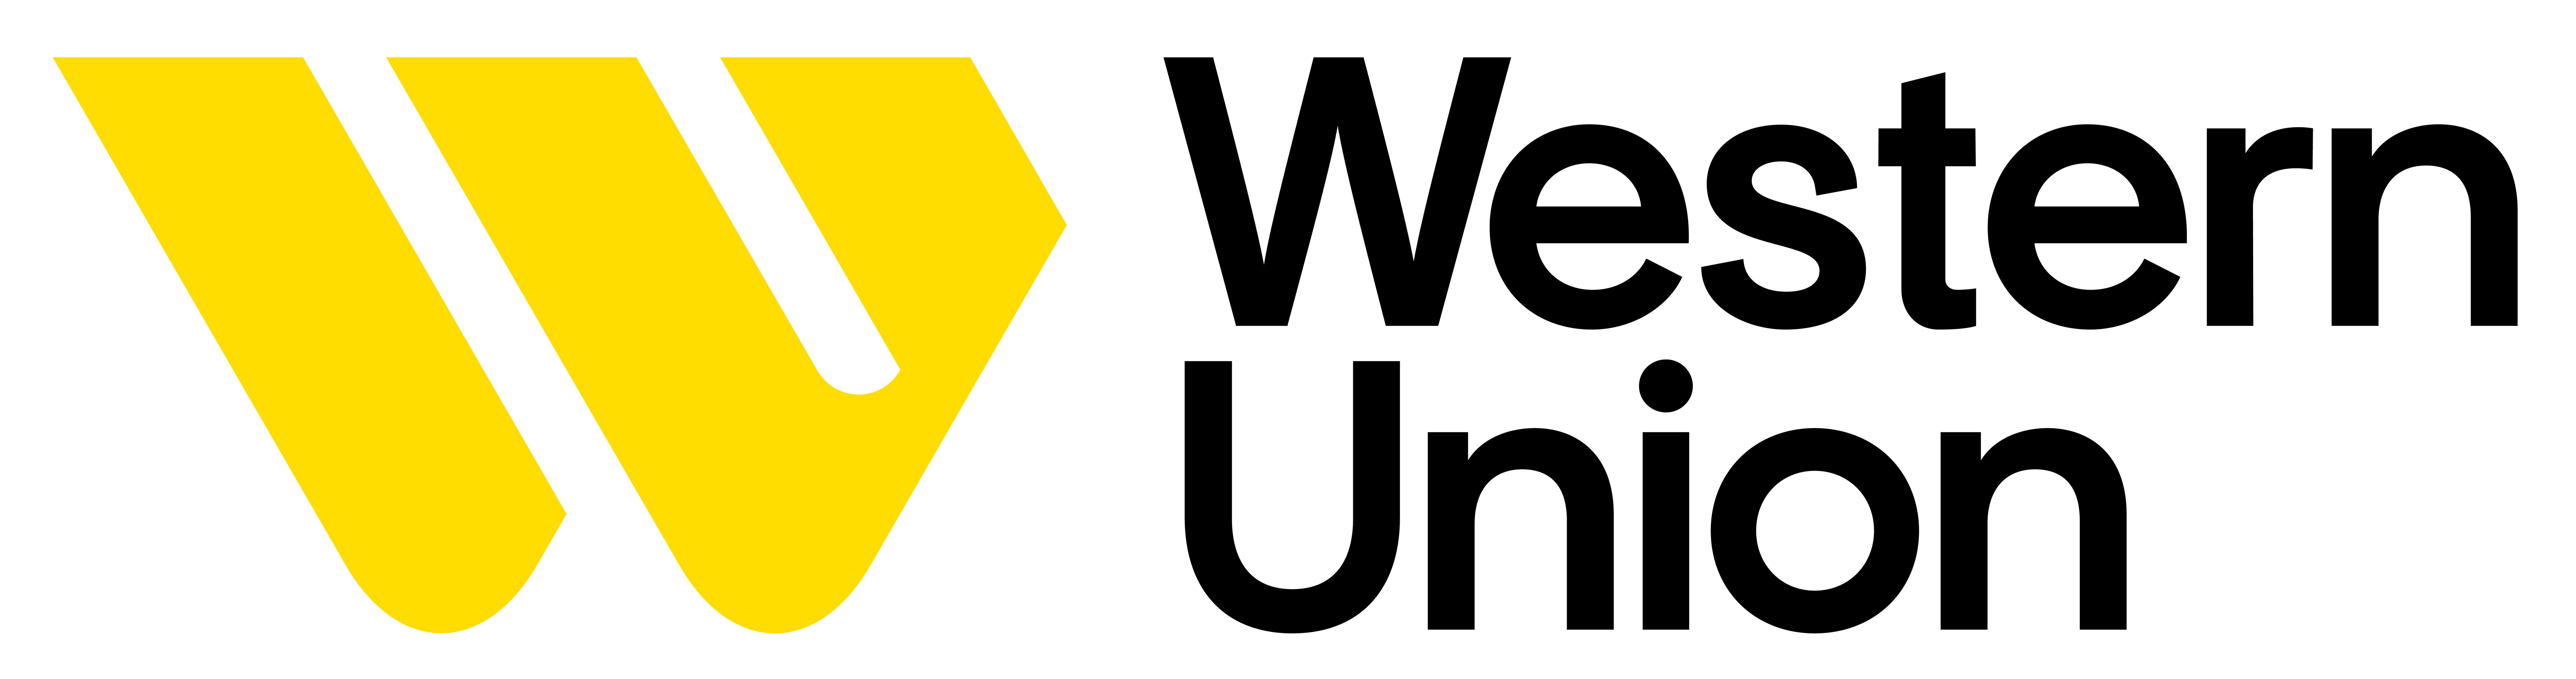 Western Union – Wikipédia, a enciclopédia livre